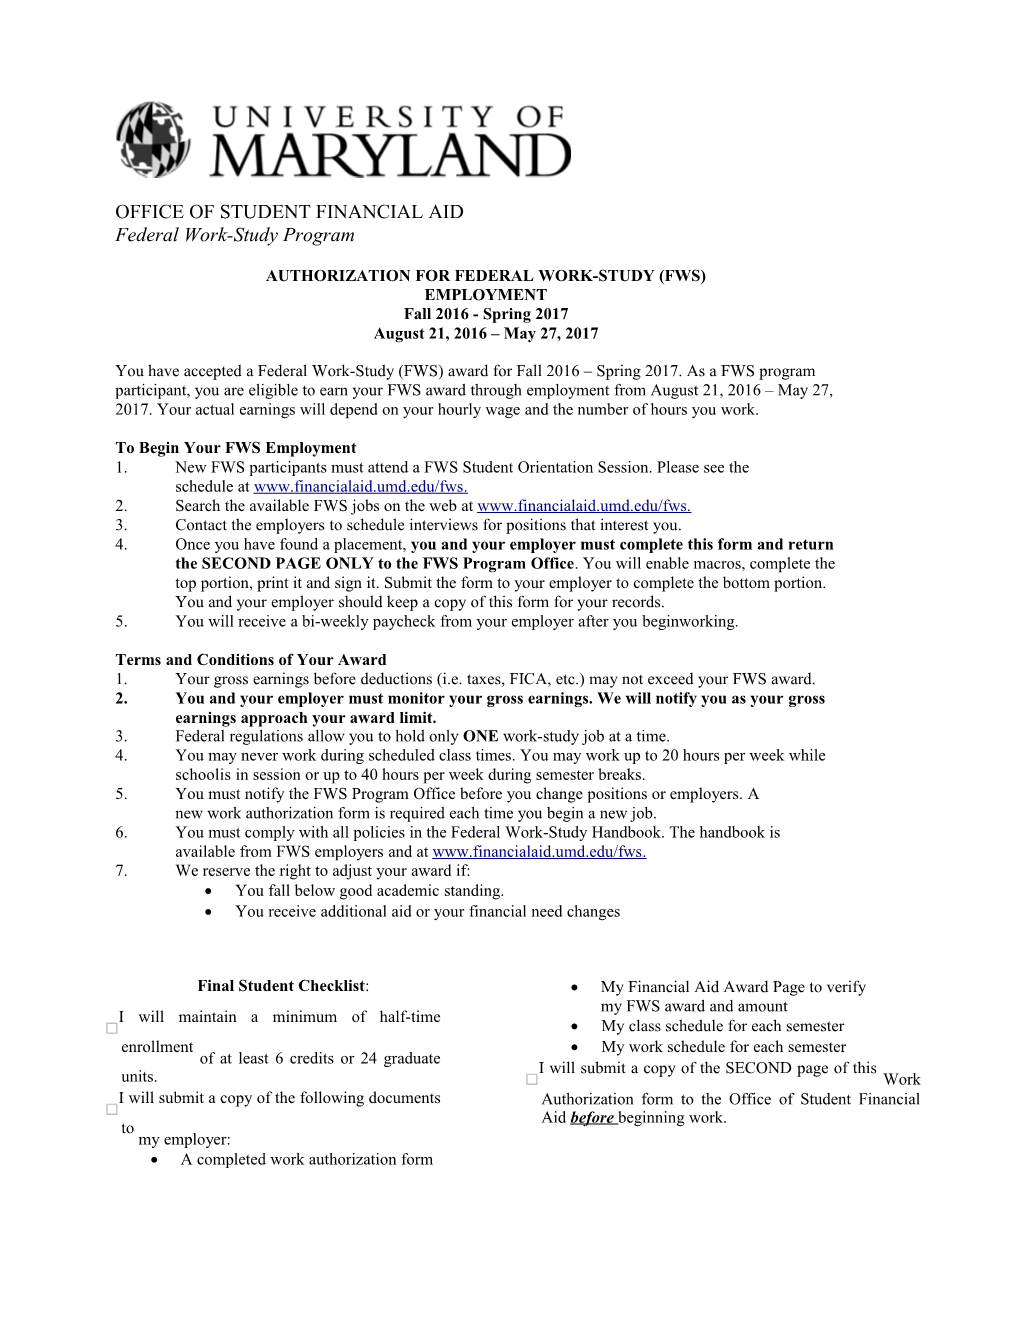 Authorization for Federal Work-Study (Fws) Employment